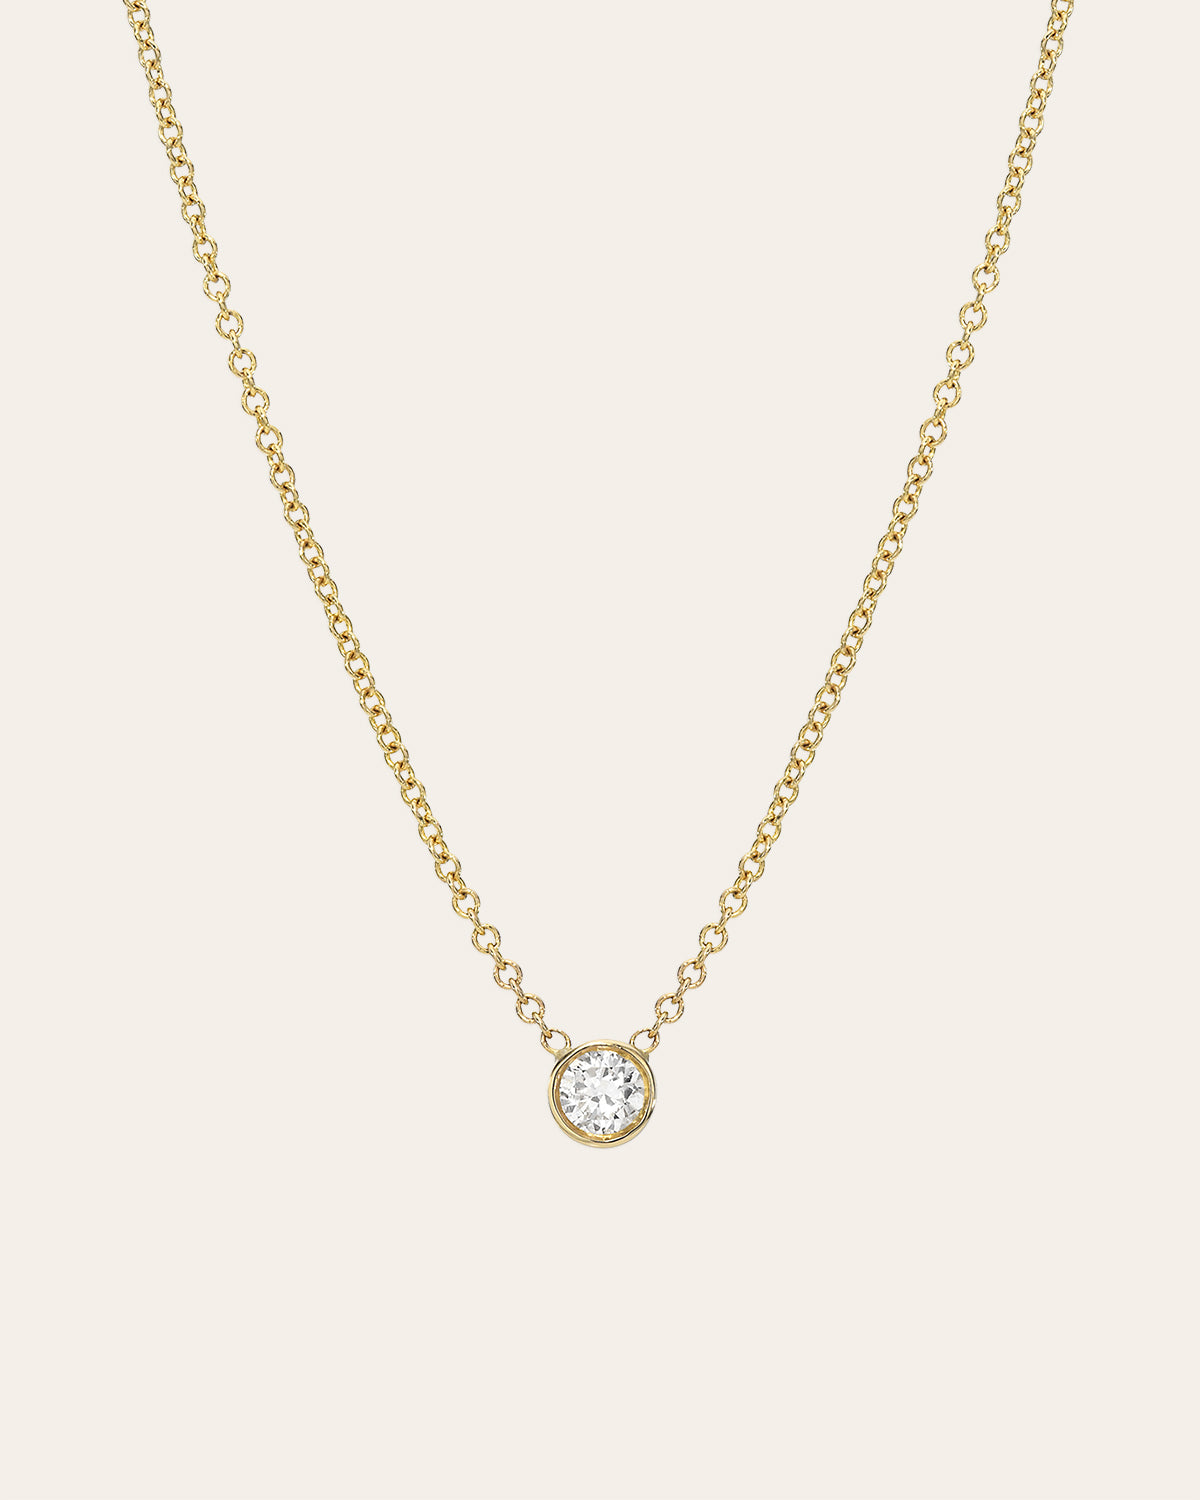 18ct White Gold 2ct Total Diamond Necklace | Ernest Jones